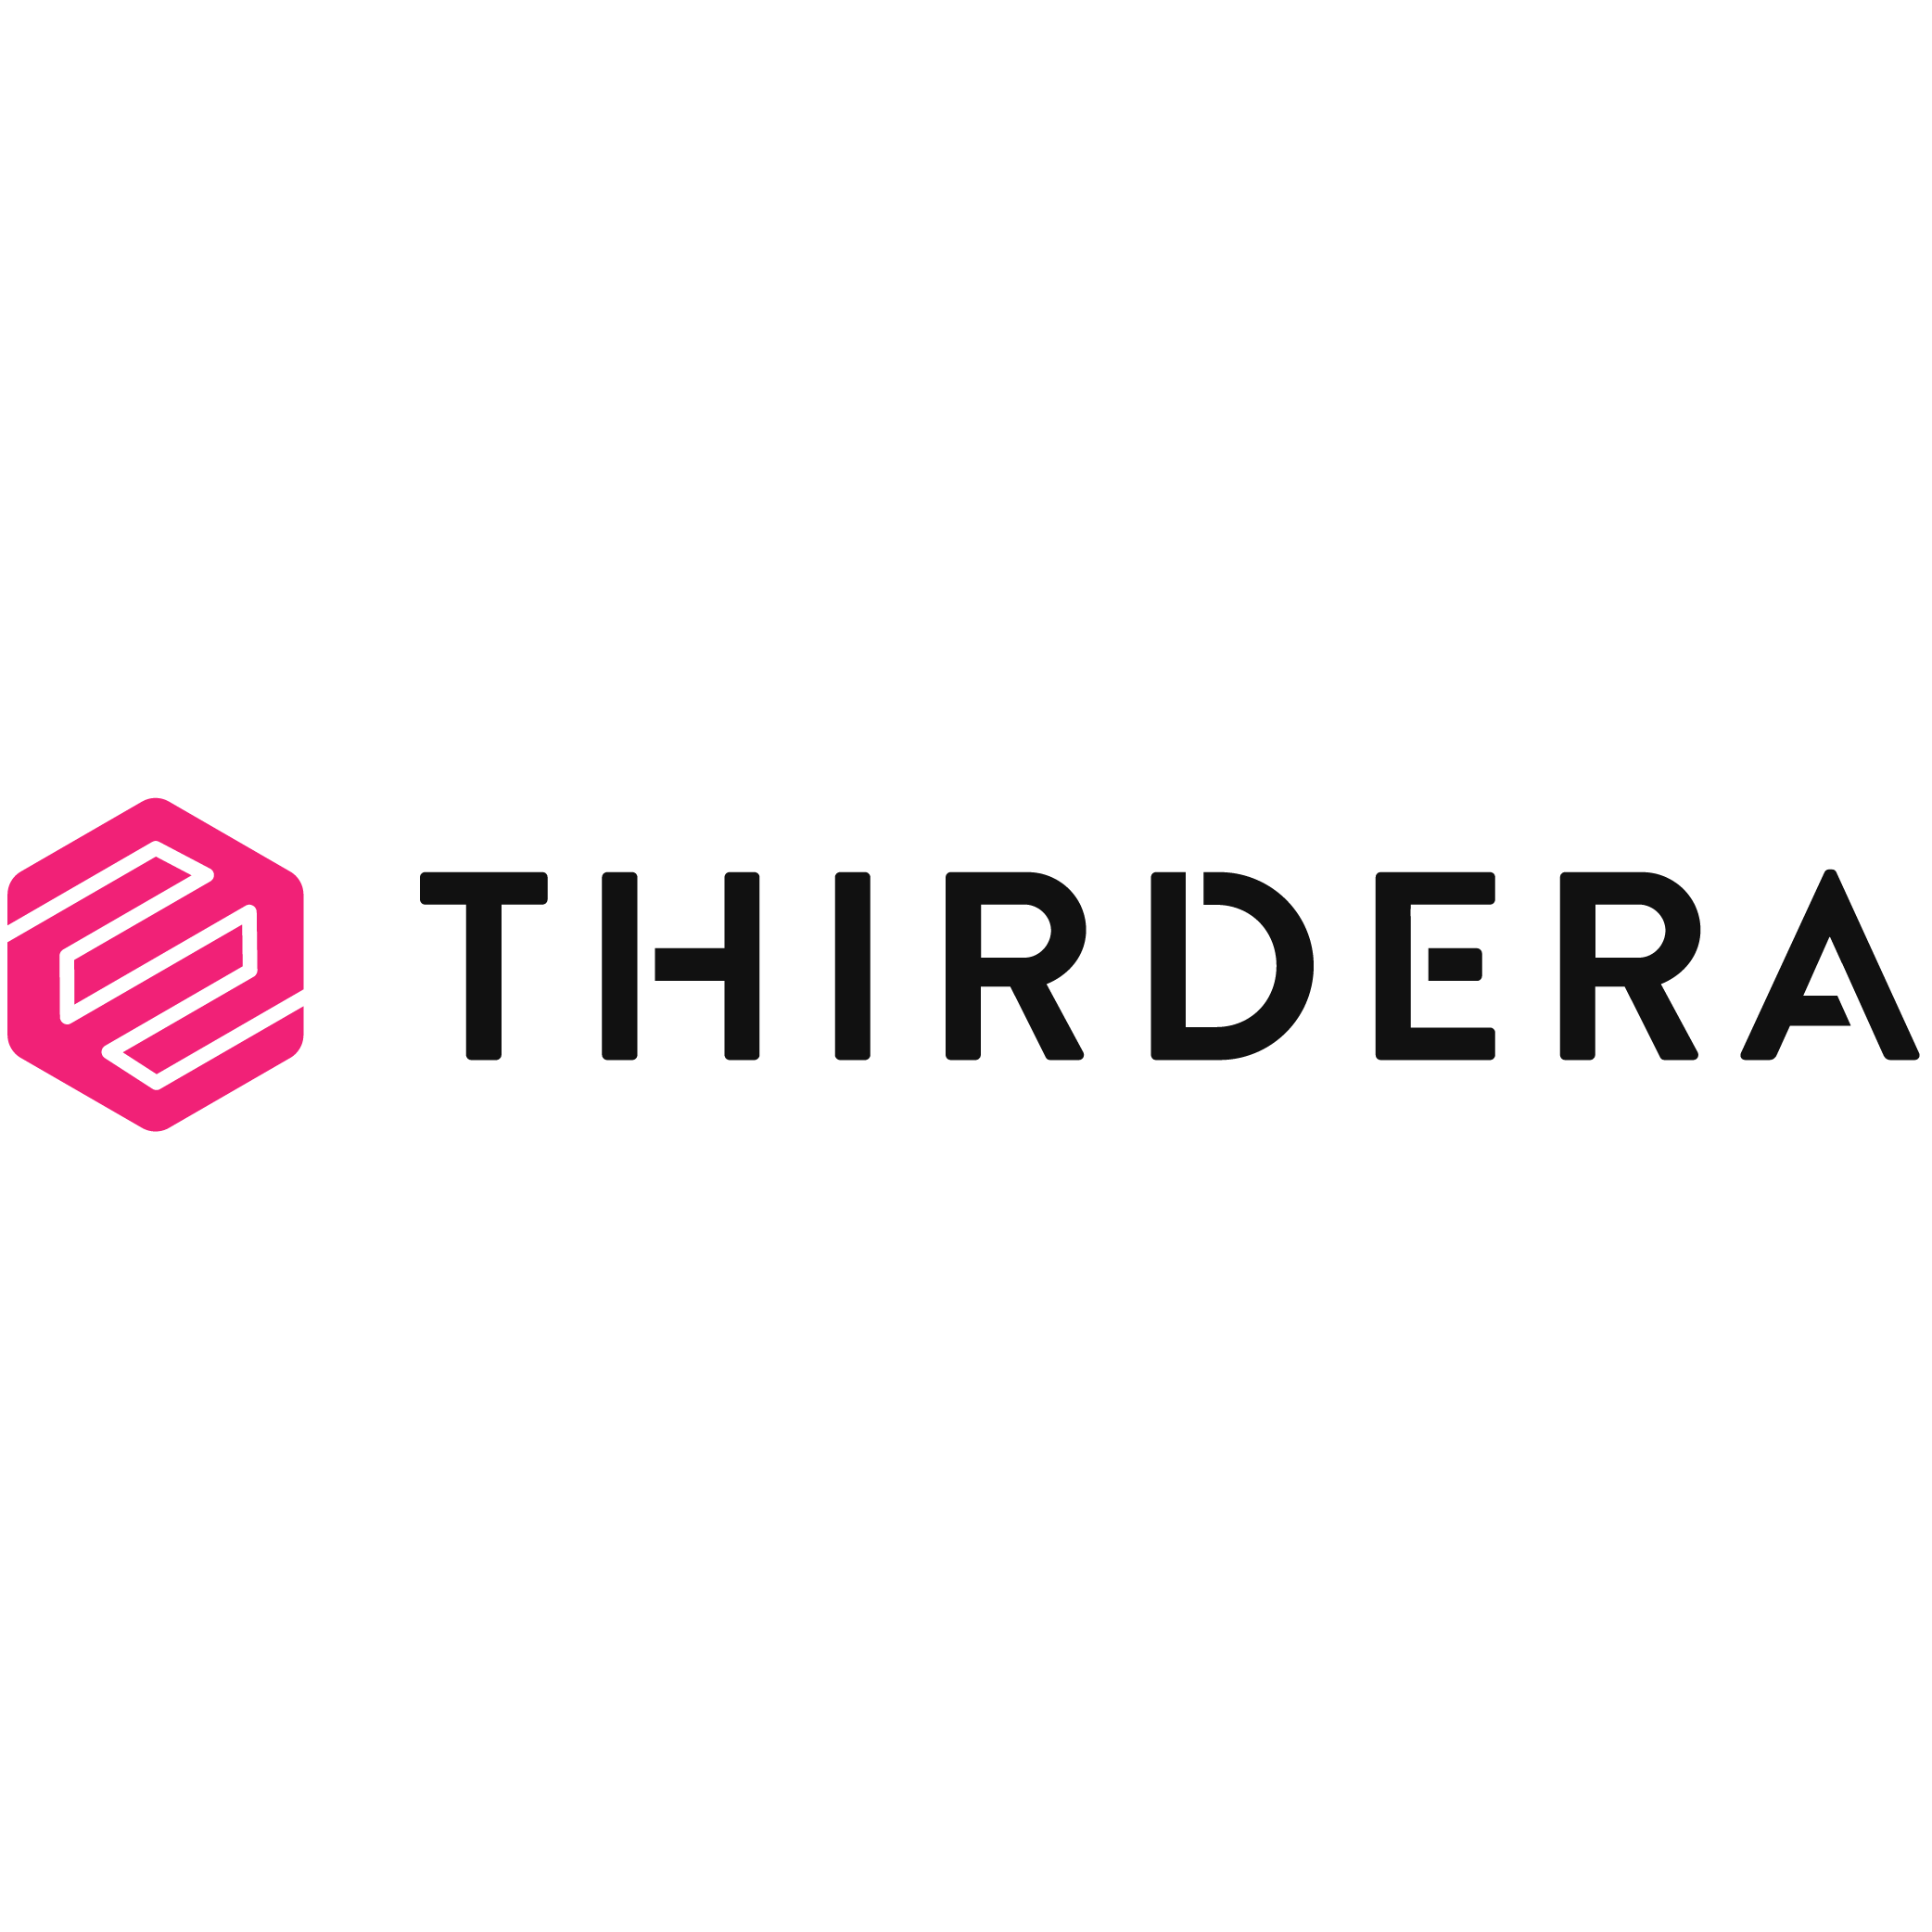 Thirdera Logo